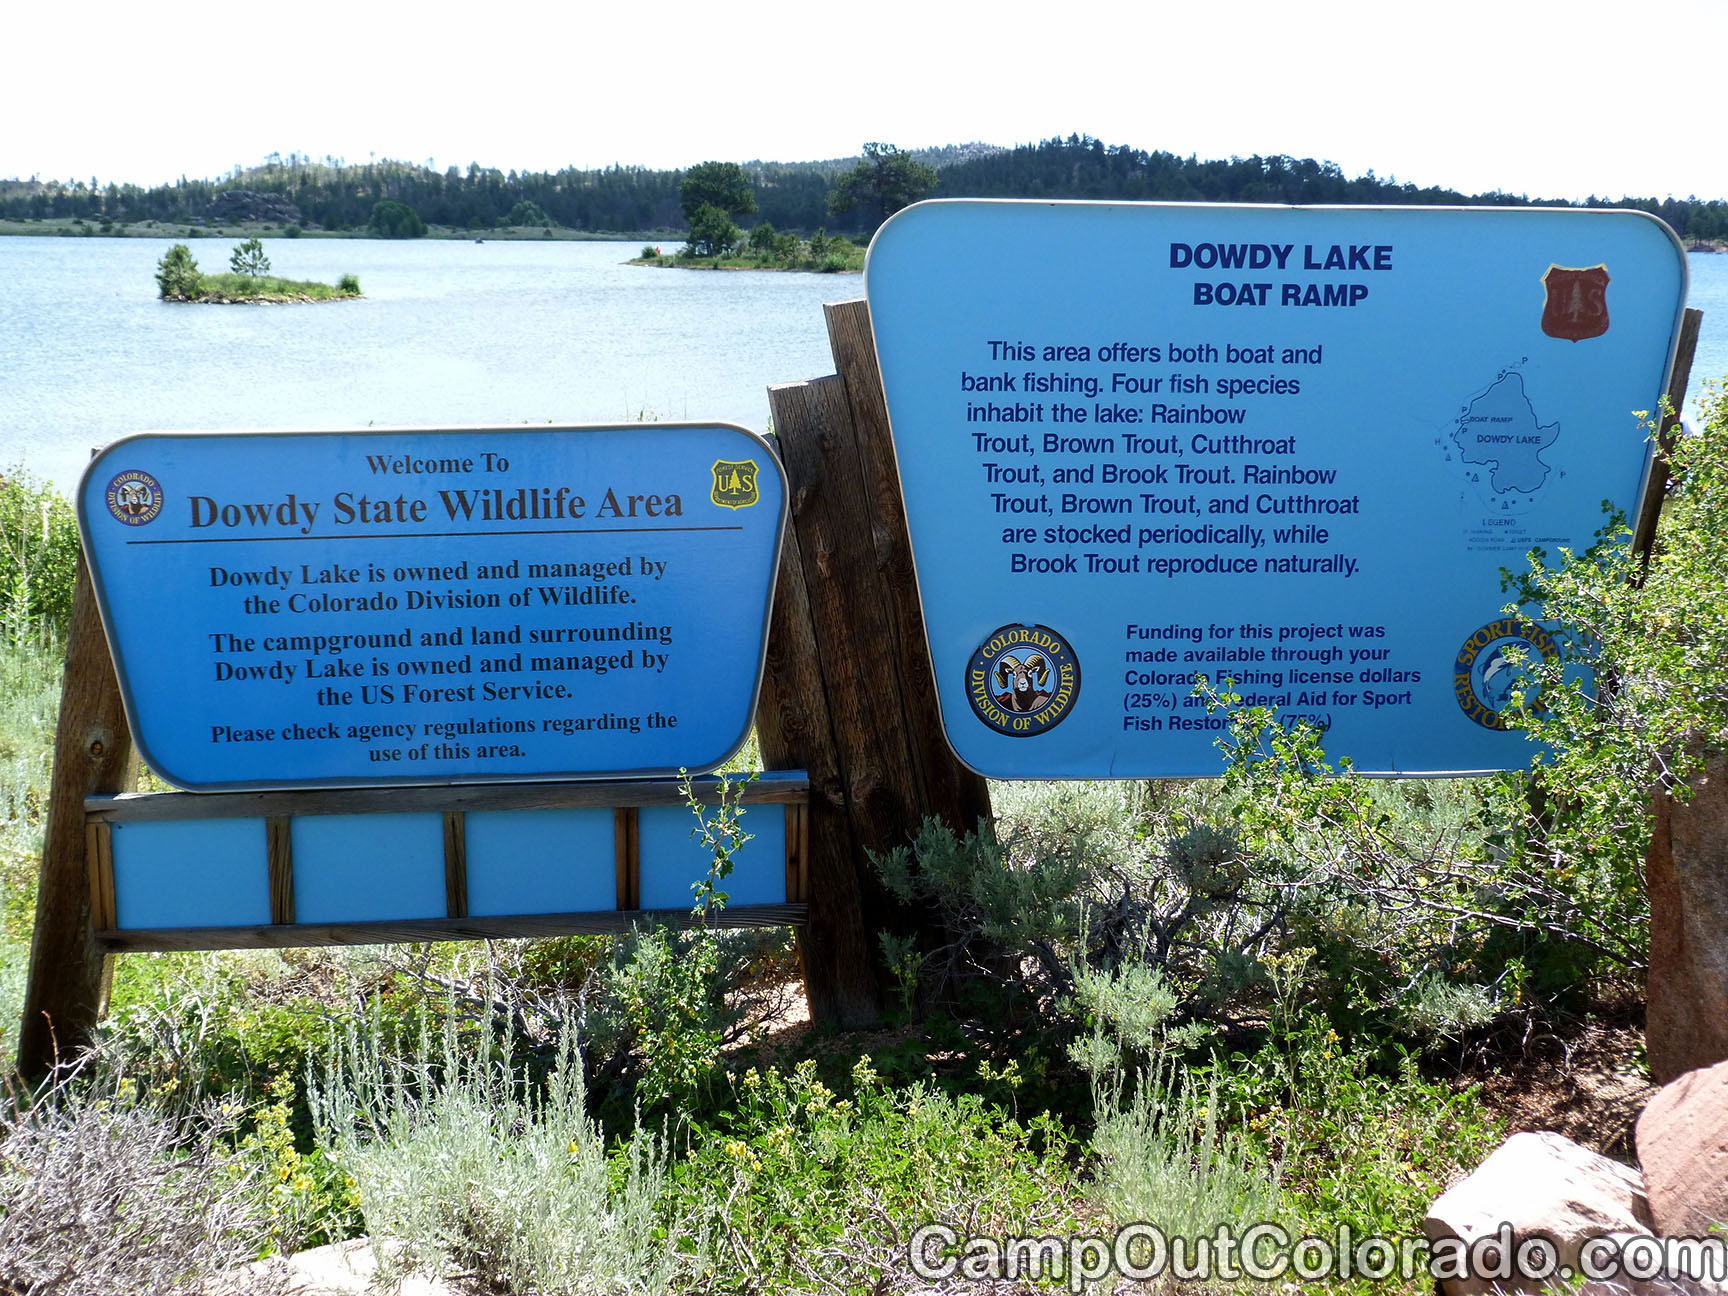 Campoutcolorado-dowdy-lake-campground-boat-rules